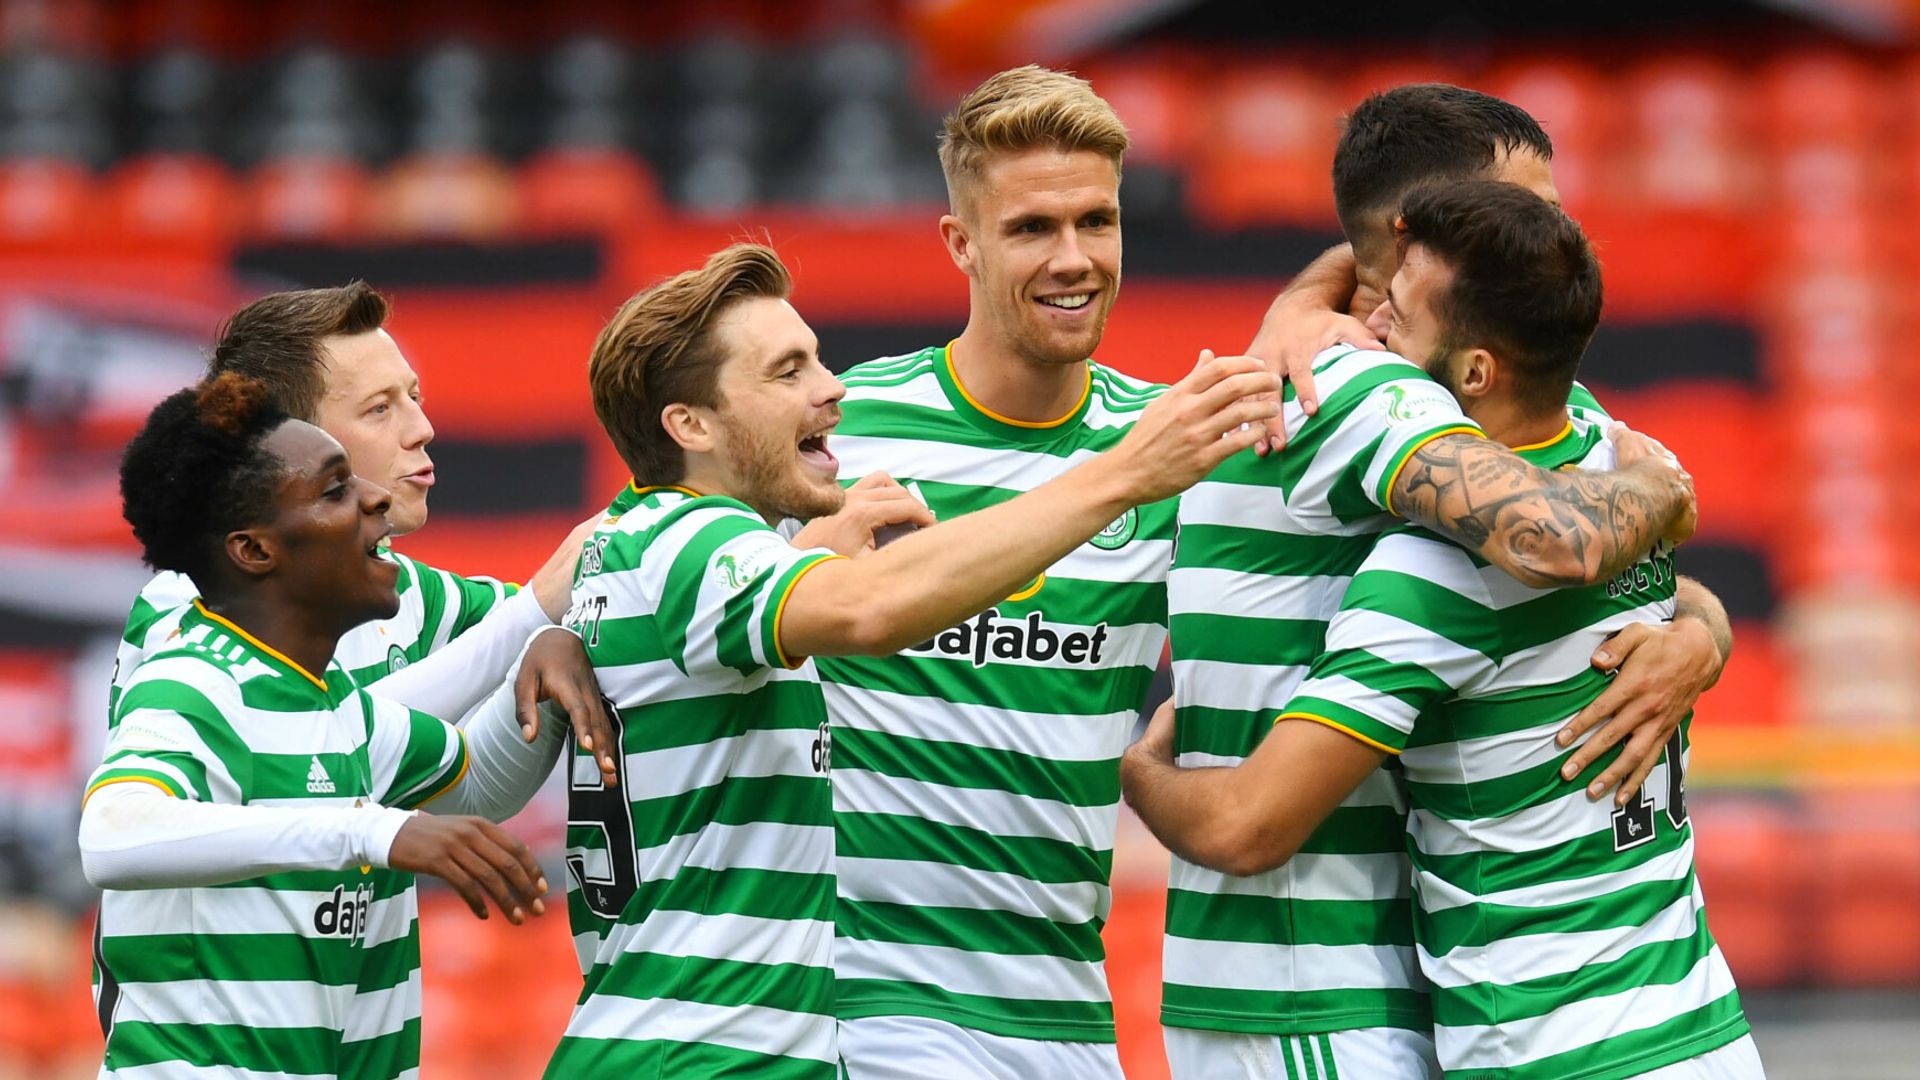 Celtic vs Motherwell - latest score